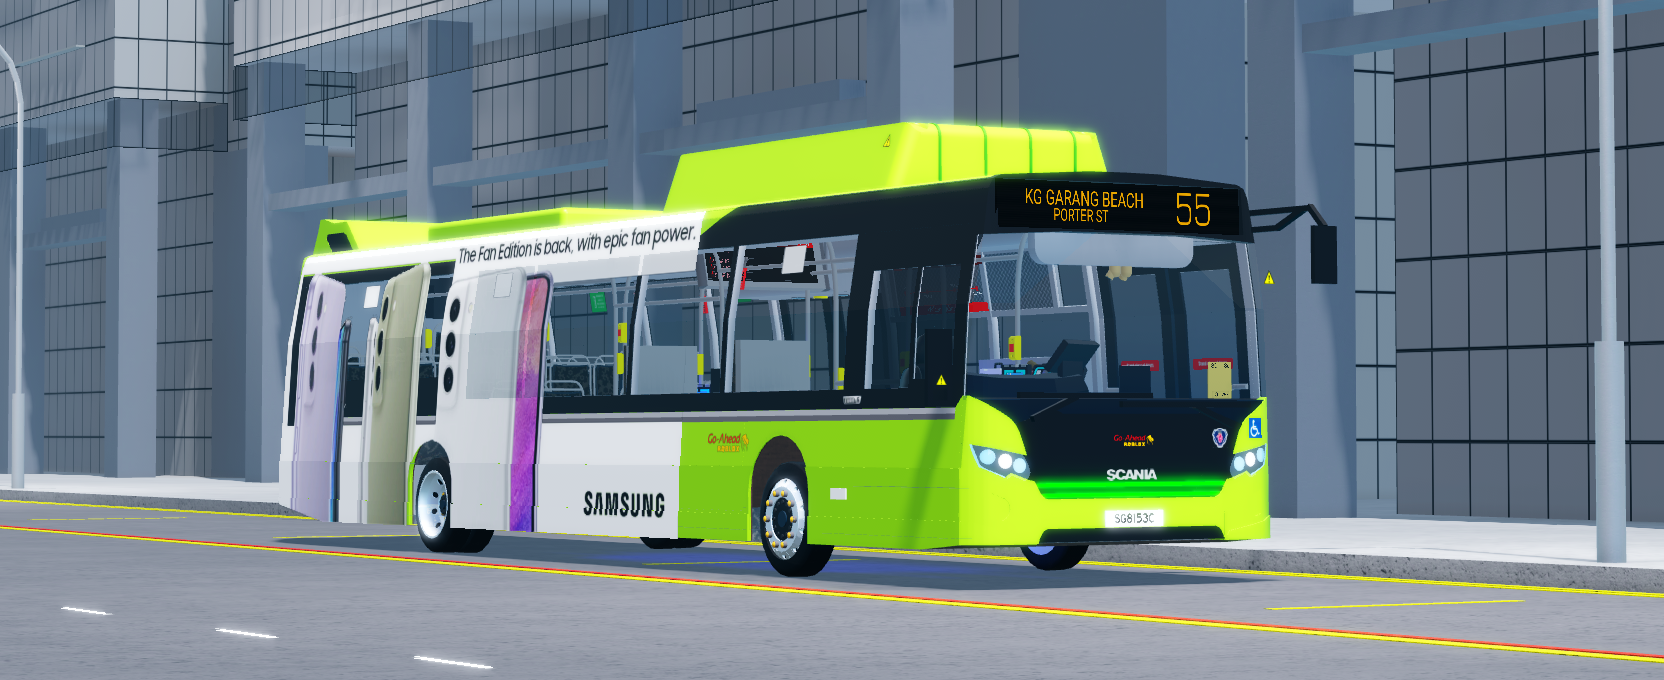 LOKIS MOTORISTA DE ÔNIBUS  Roblox - Transport Tram Bus Simulator 